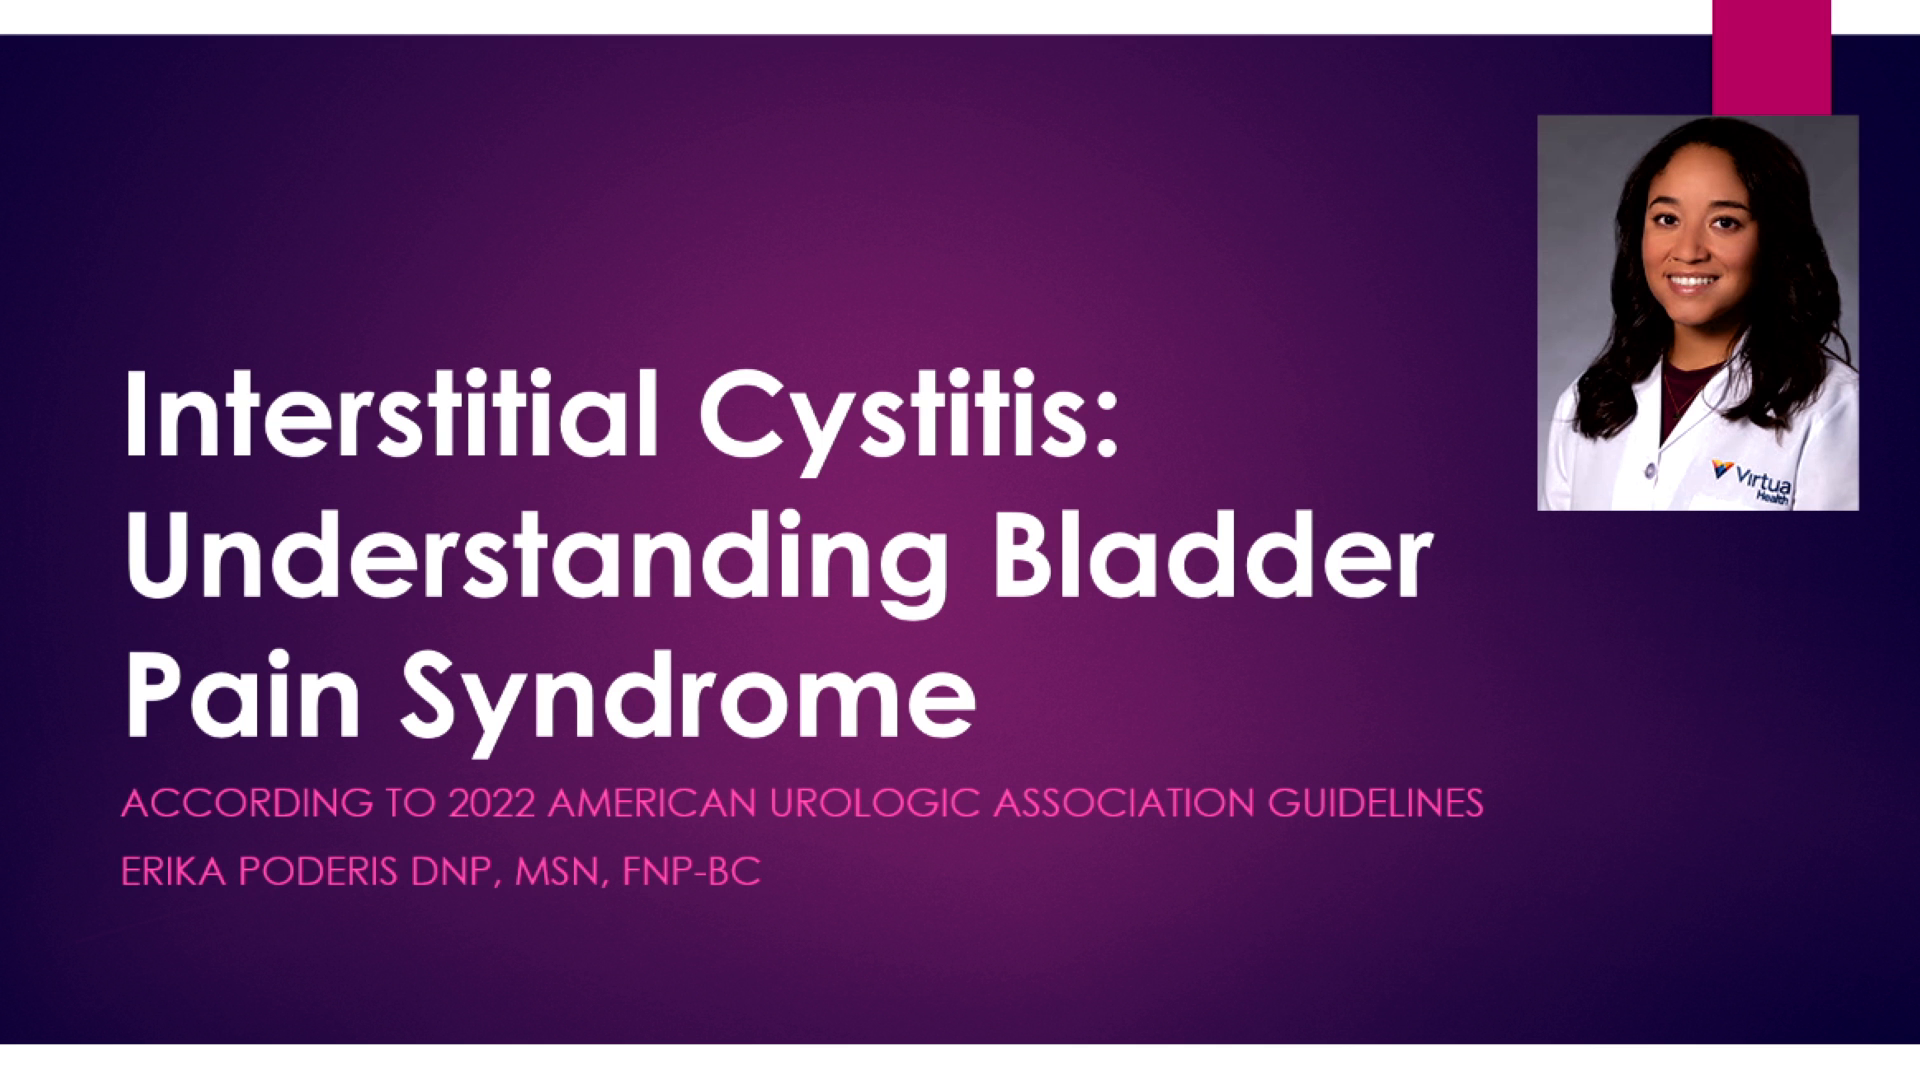 Interstitial Cystitis: Understanding Bladder Pain Syndrome